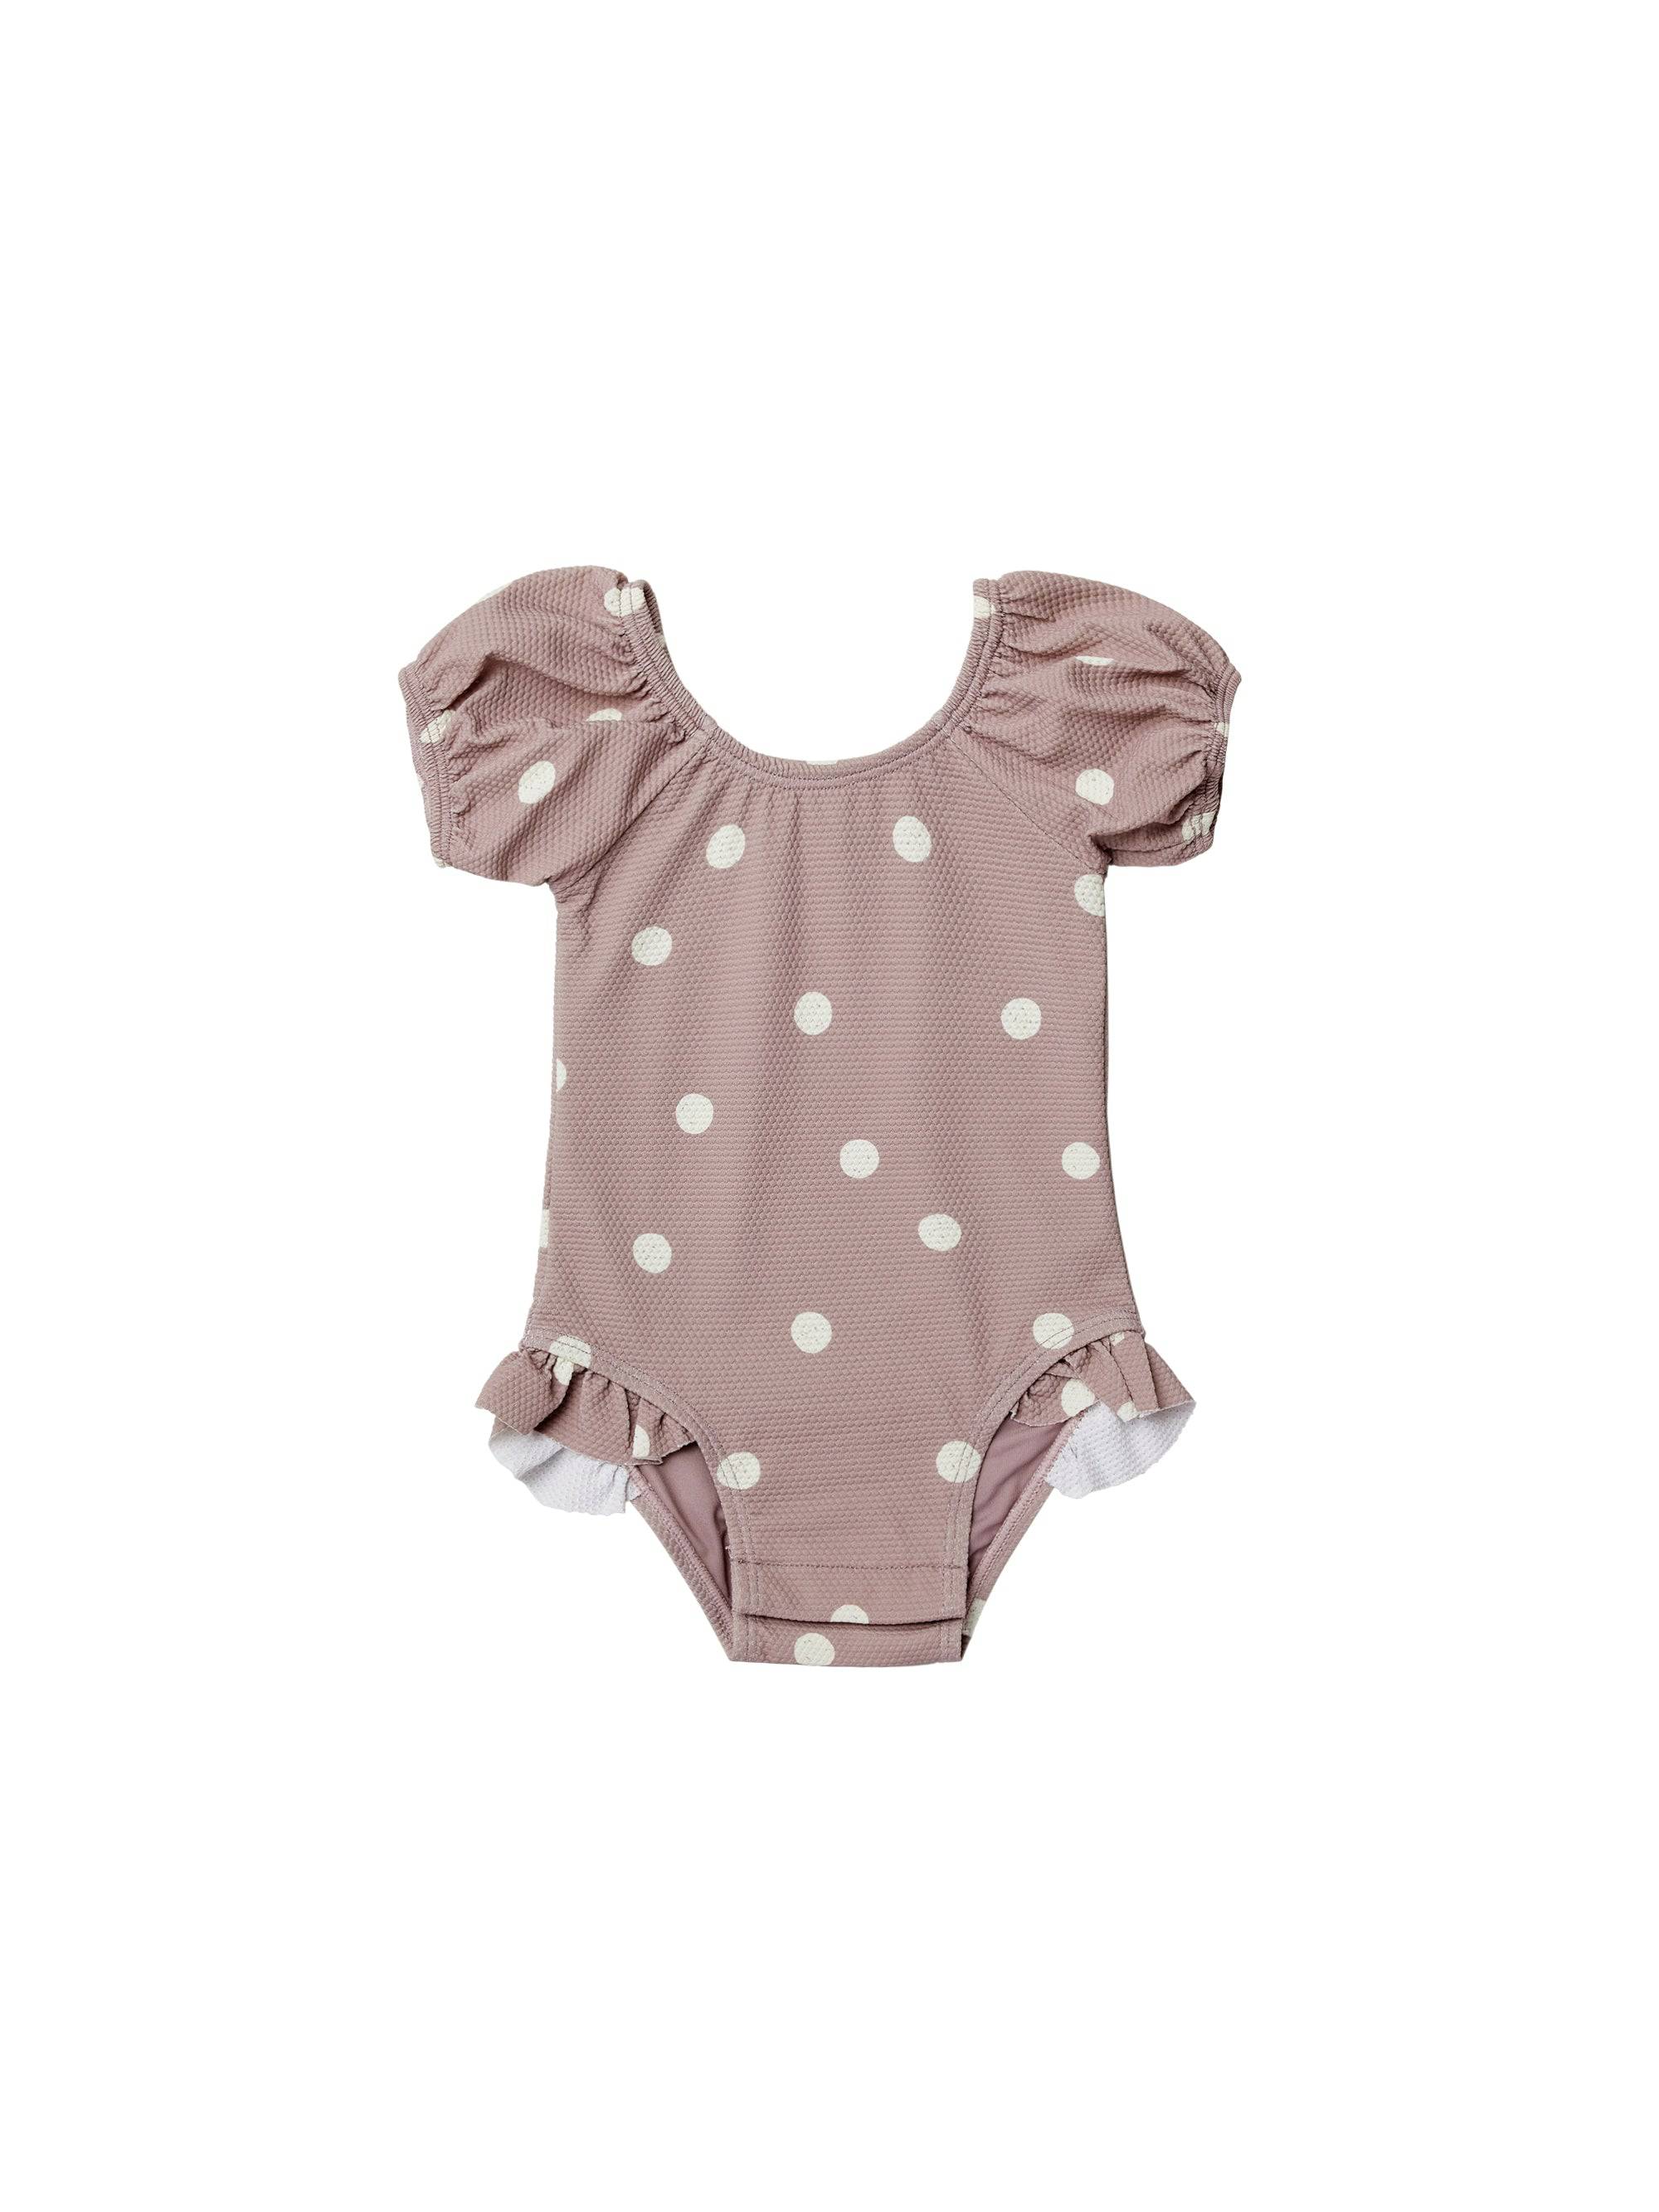 Dots Catalina One-Piece Swimsuit - Twinkle Twinkle Little One